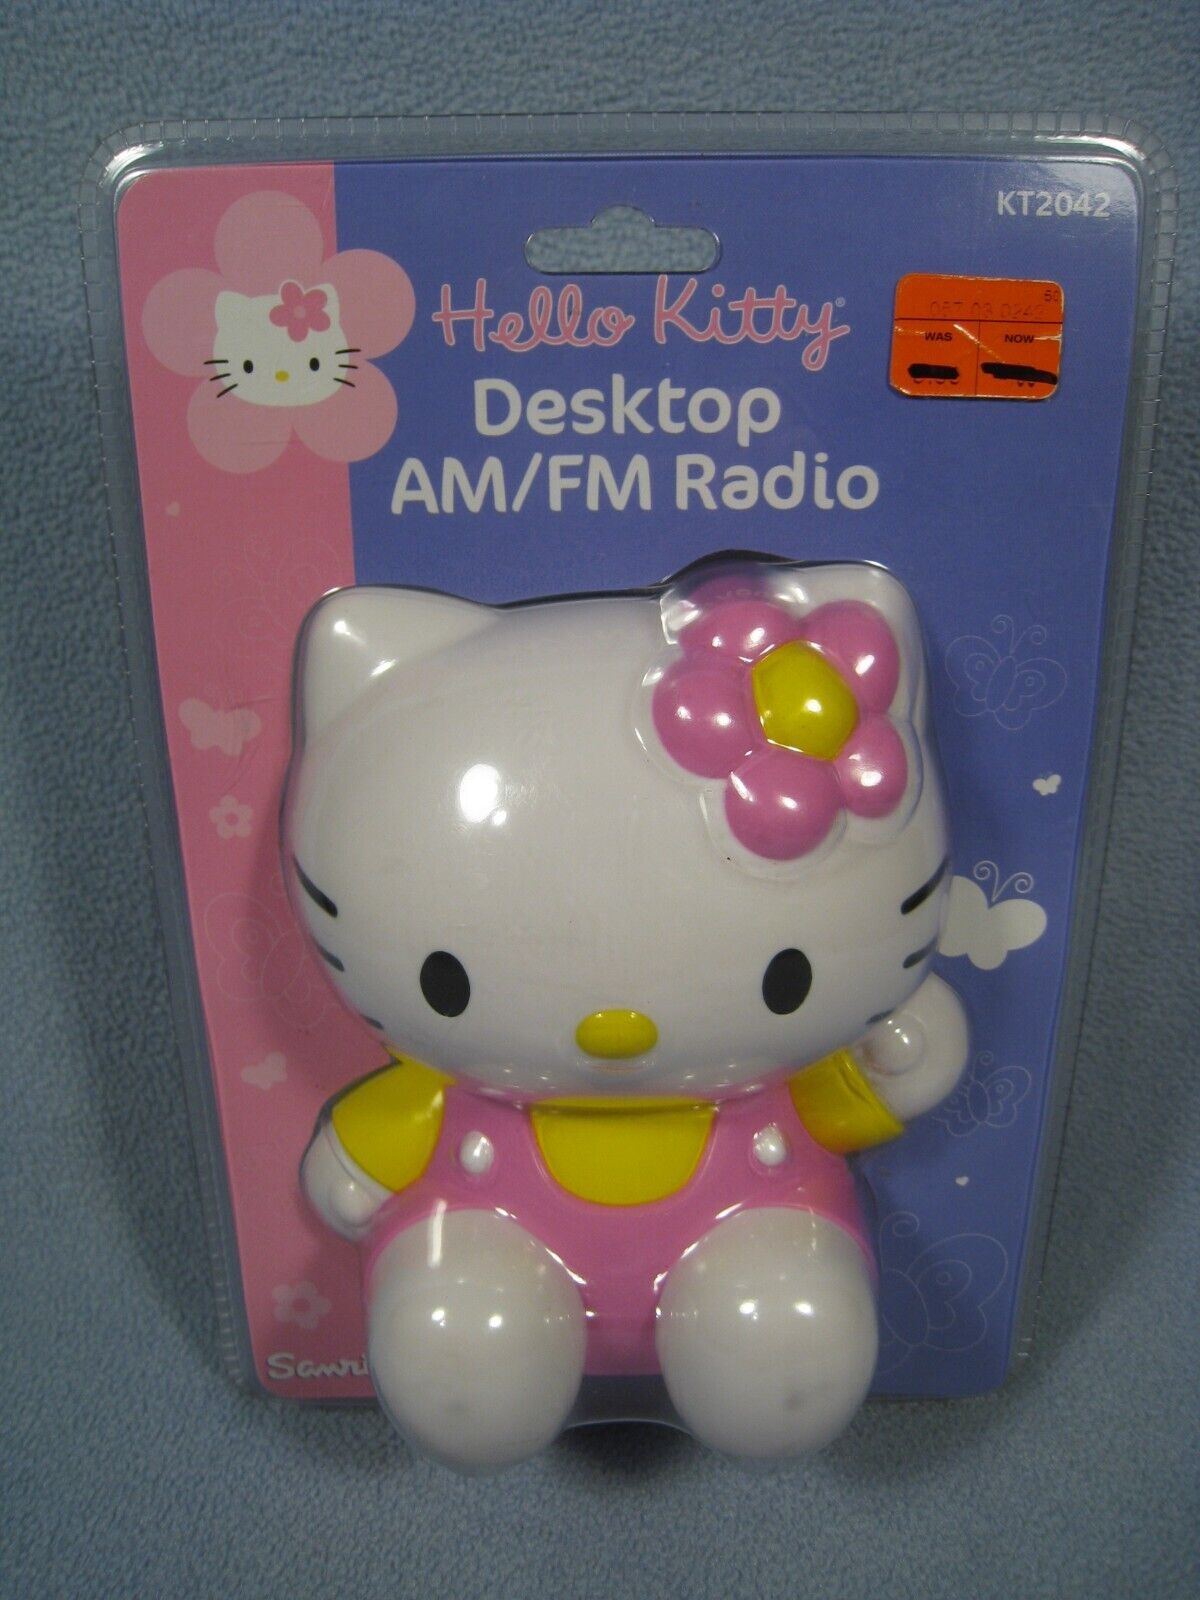 New Sanrio 2004 Hello Kitty AM/FM Desktop Radio KT. 2042